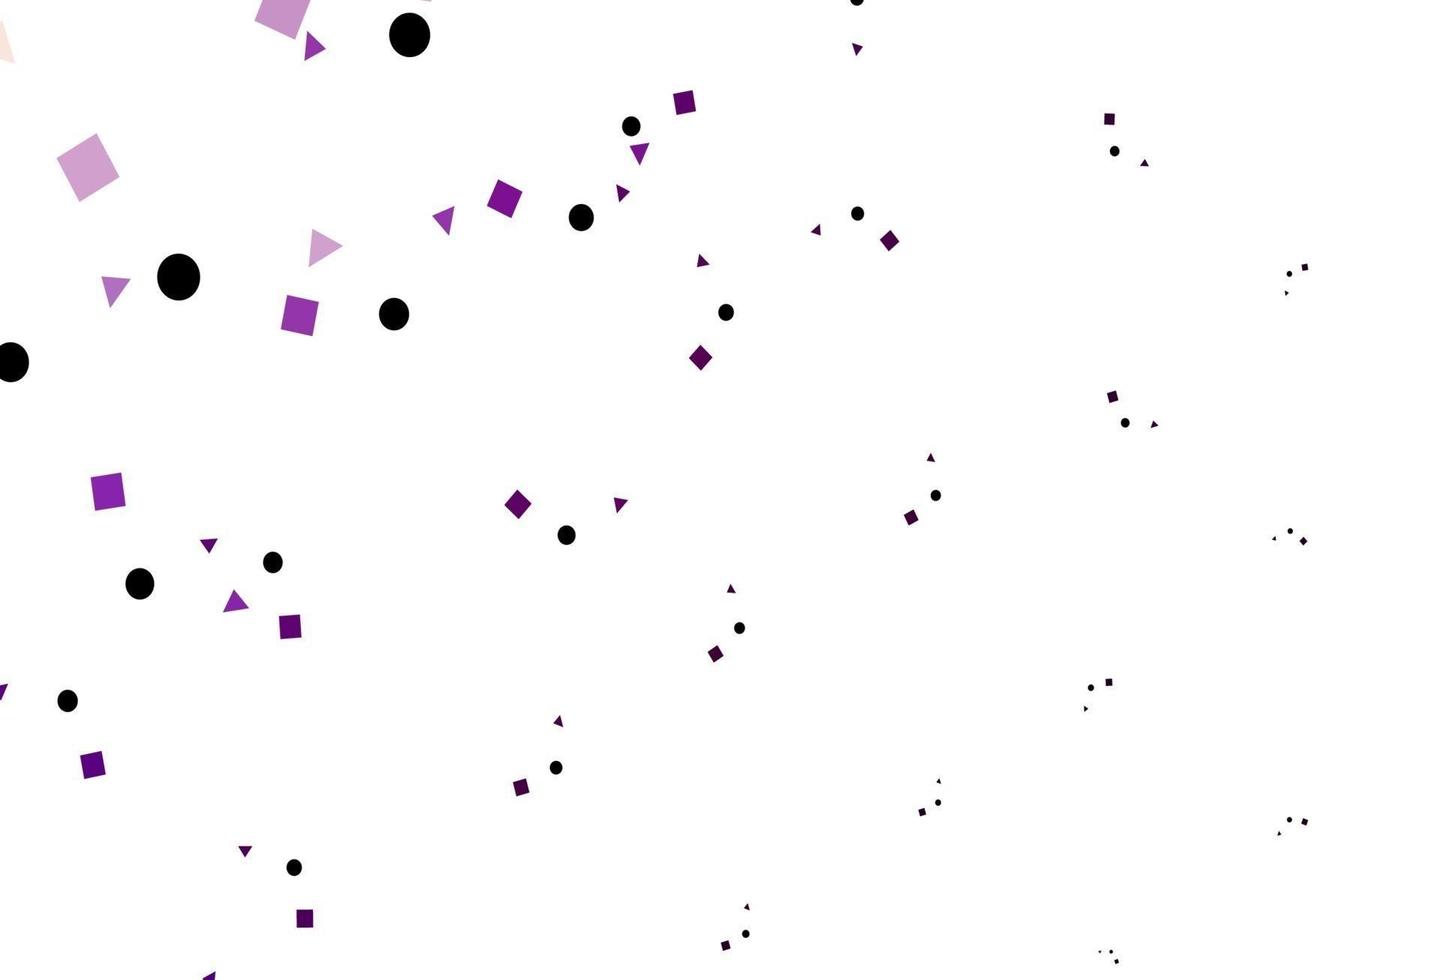 textura vector roxo claro em estilo poli com círculos, cubos.